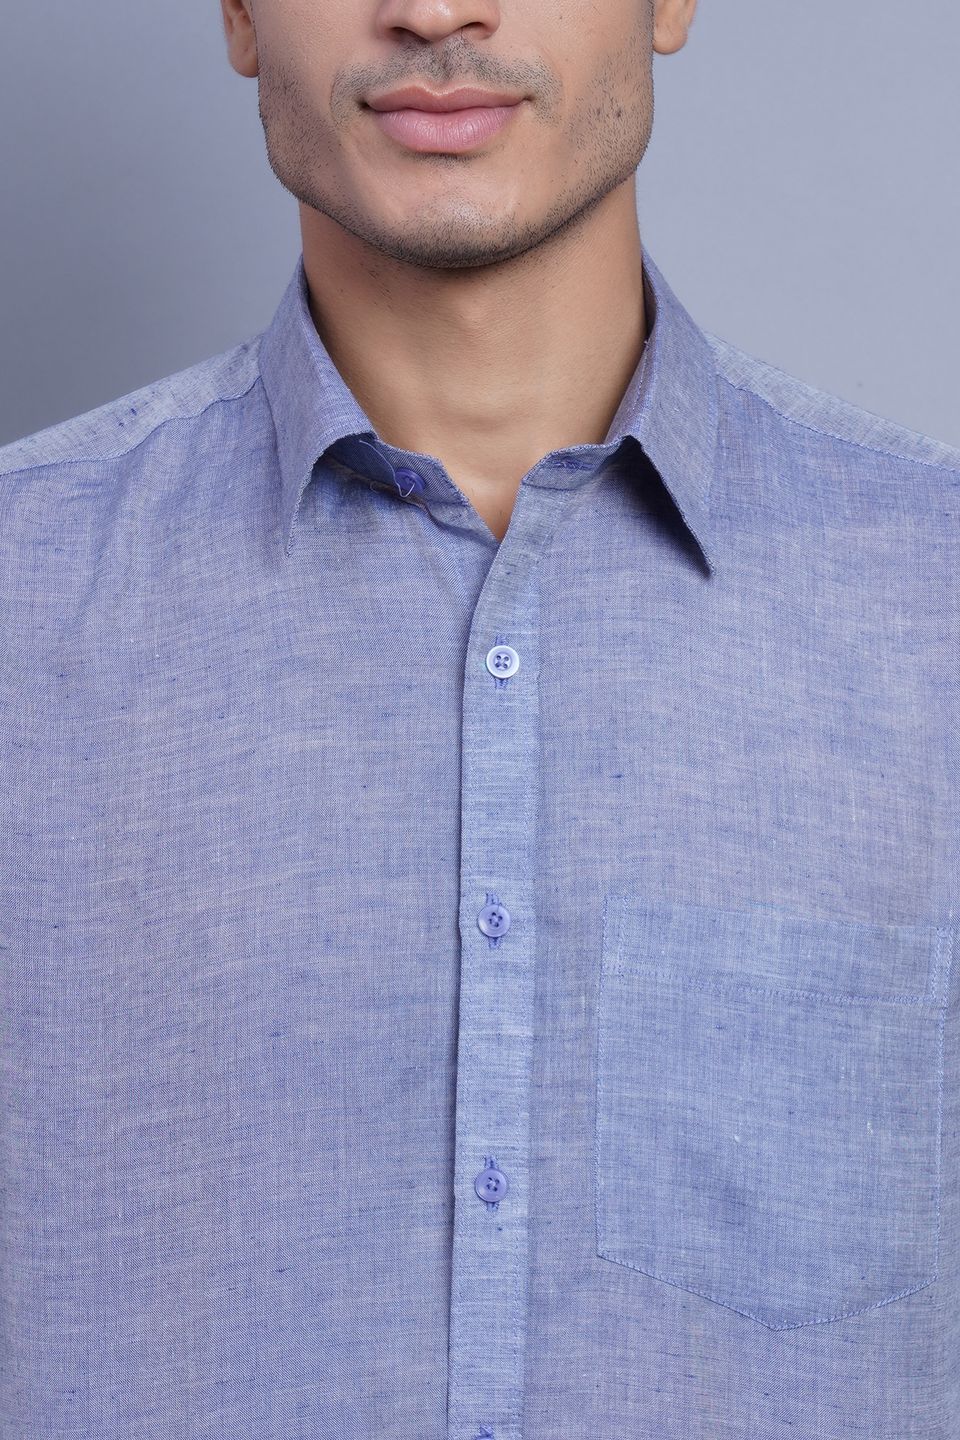 Wintage Men's Linen Casual Shirt: Blue